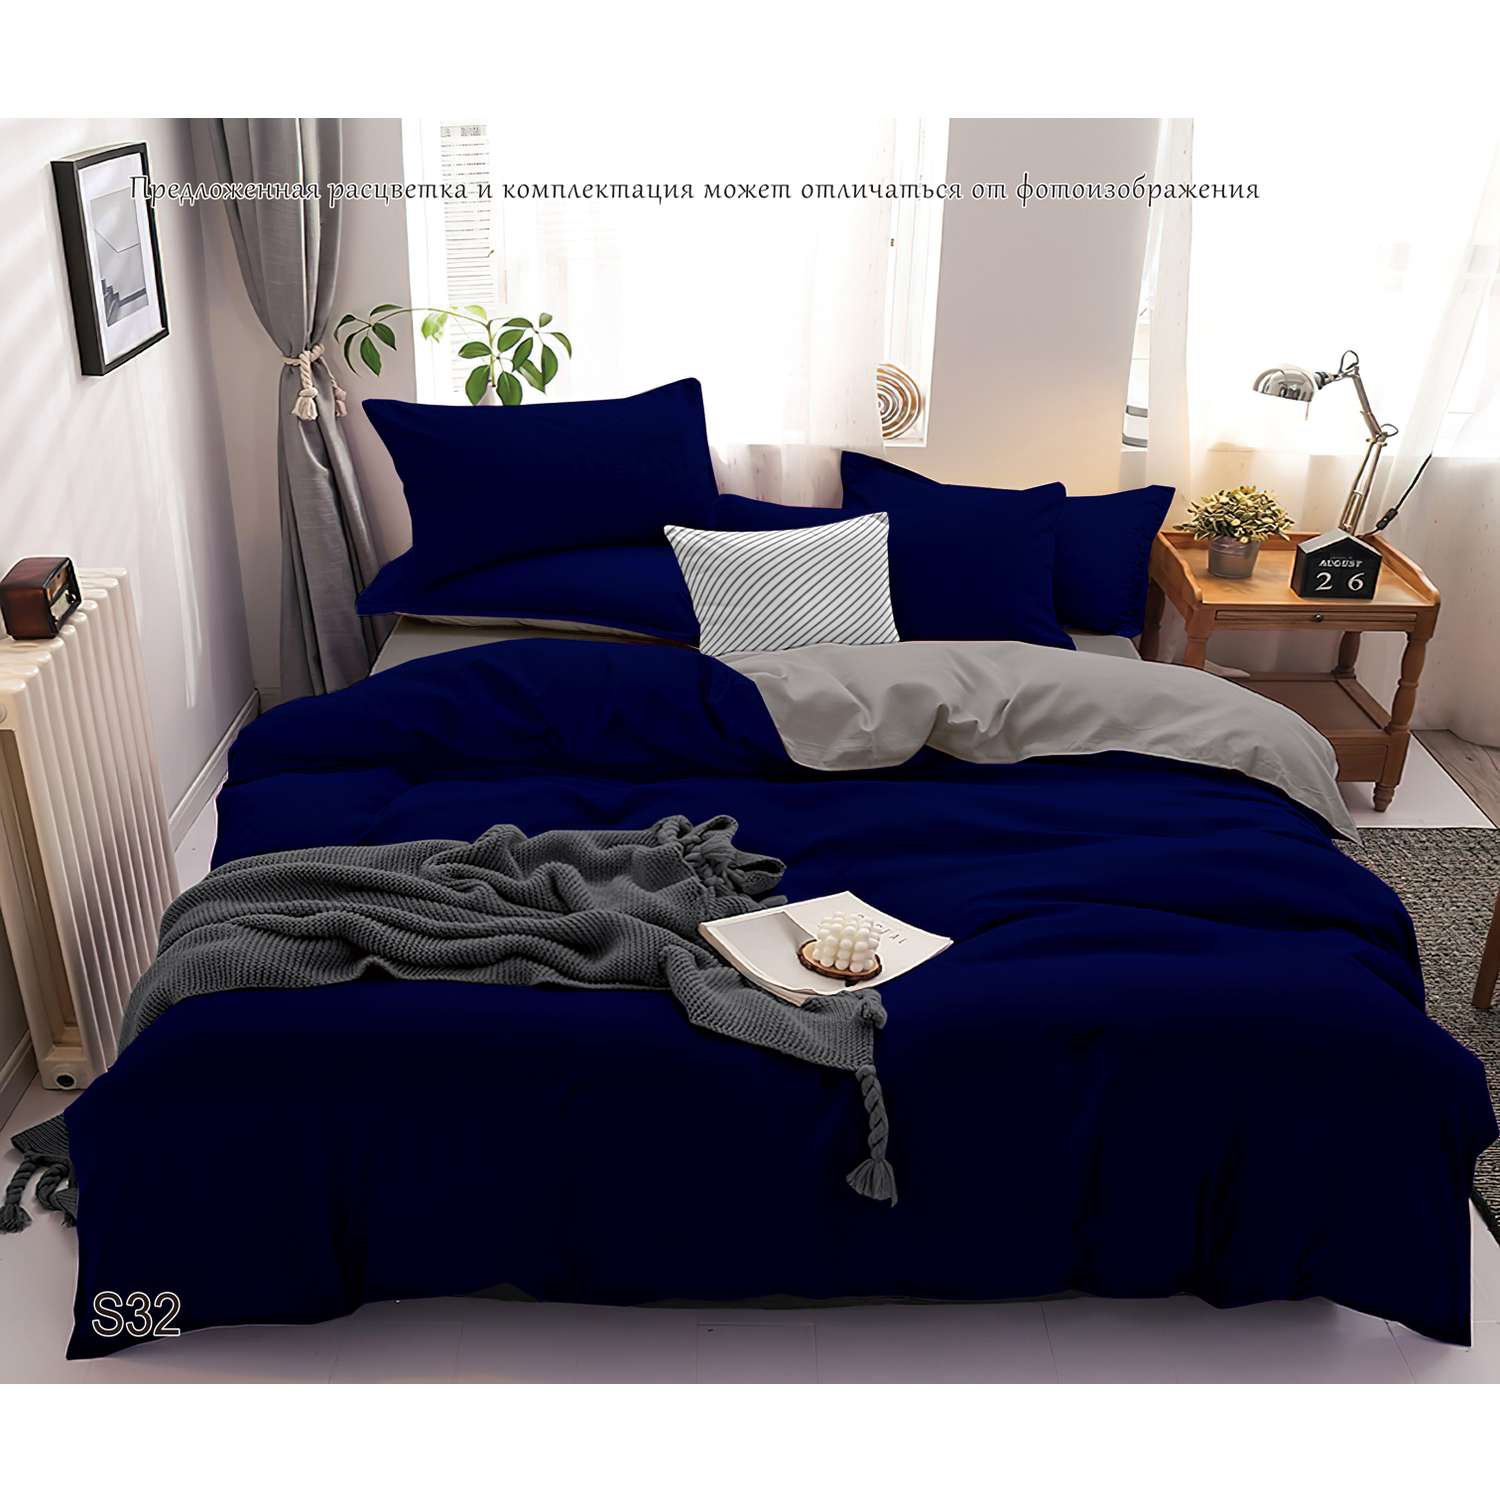 Комплект постельного белья PAVLine Манетти полисатин Евро темно-синий/серый S32 - фото 2